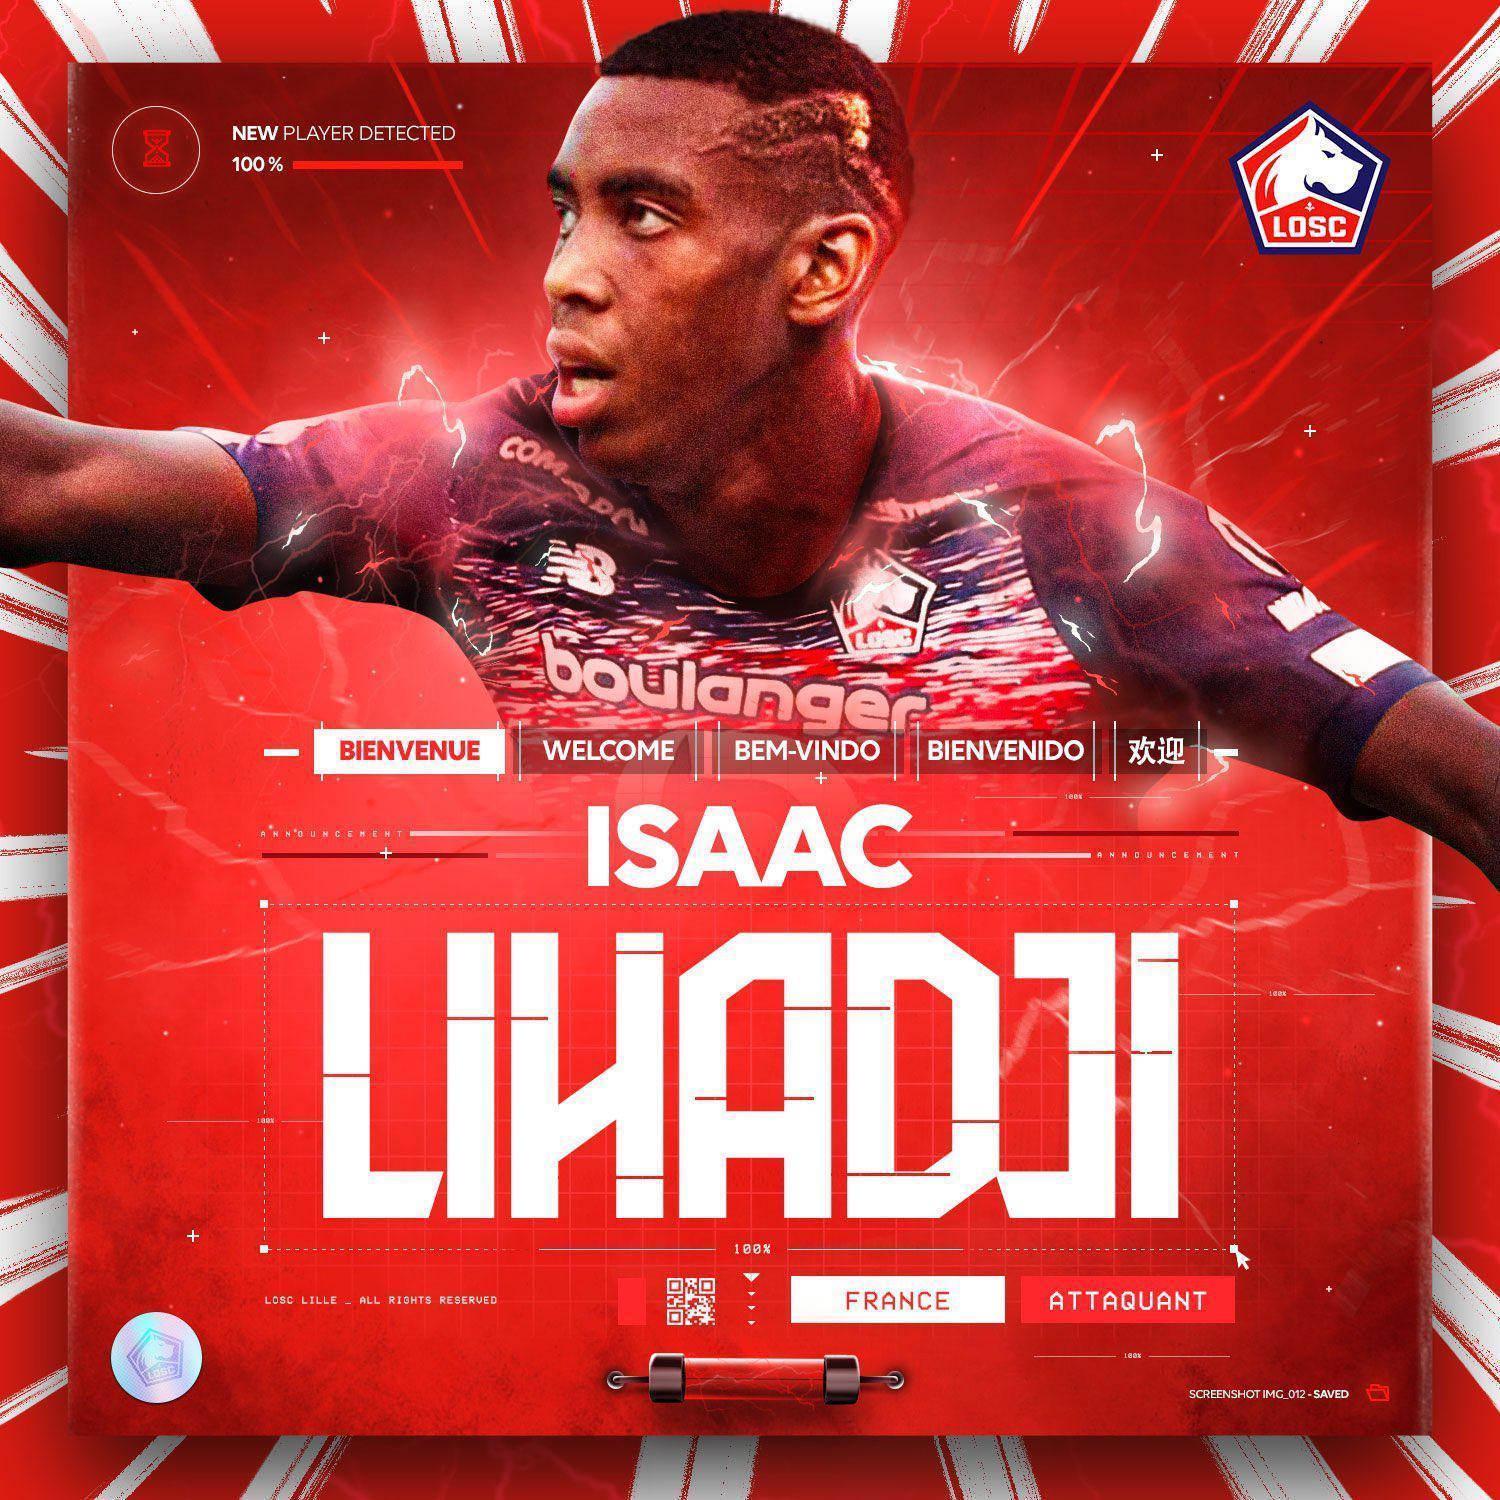 Ligue 1 ekibi Lille, 3 genç futbolcuyu transfer etti